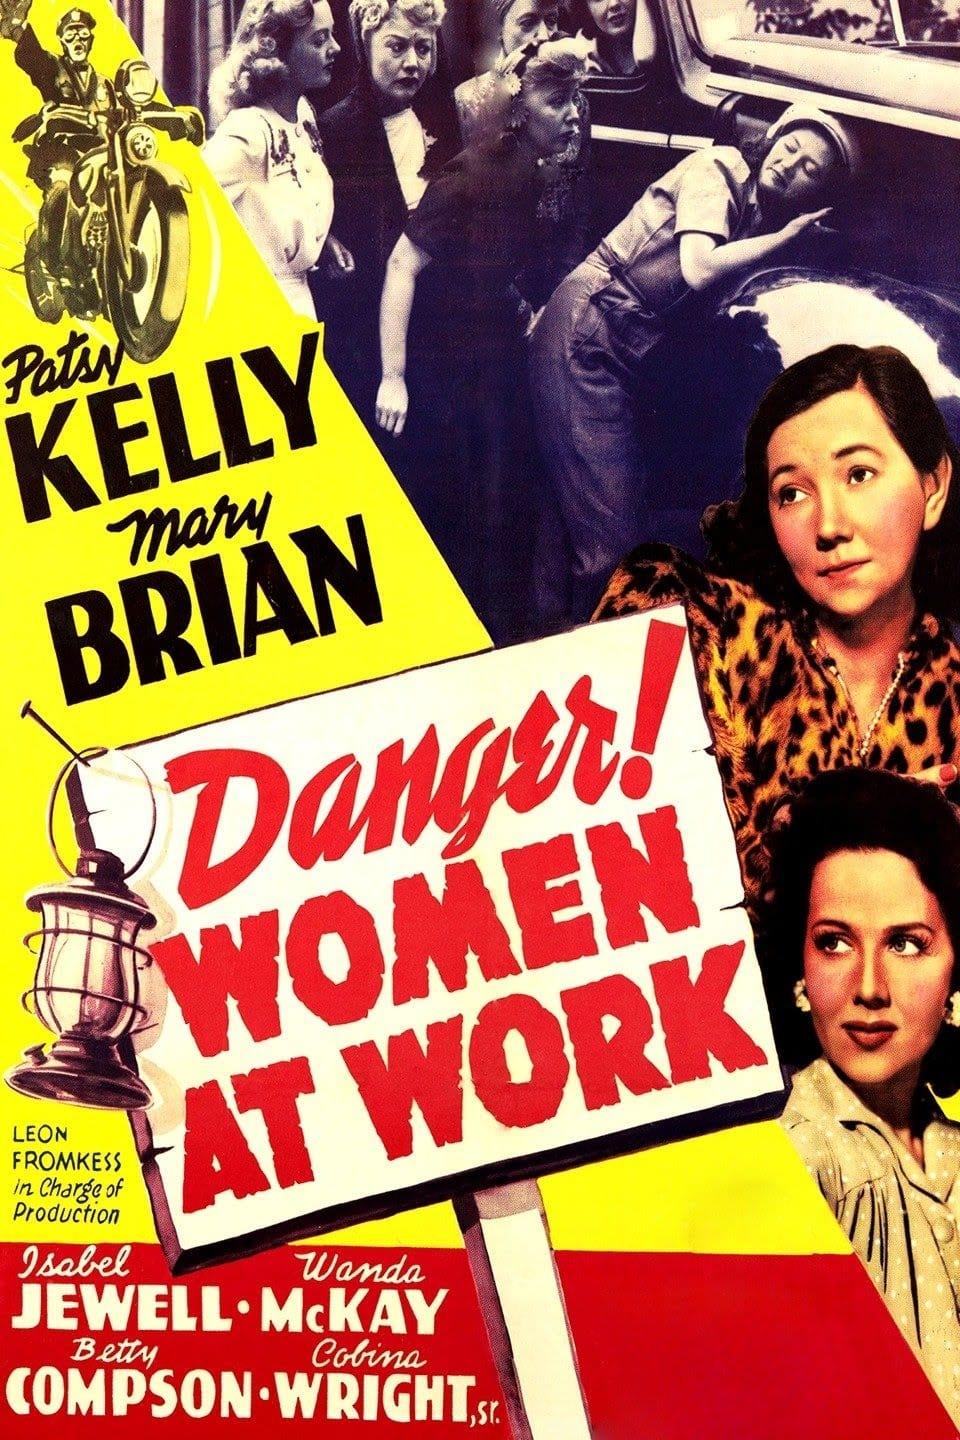 Danger! Women at Work poster